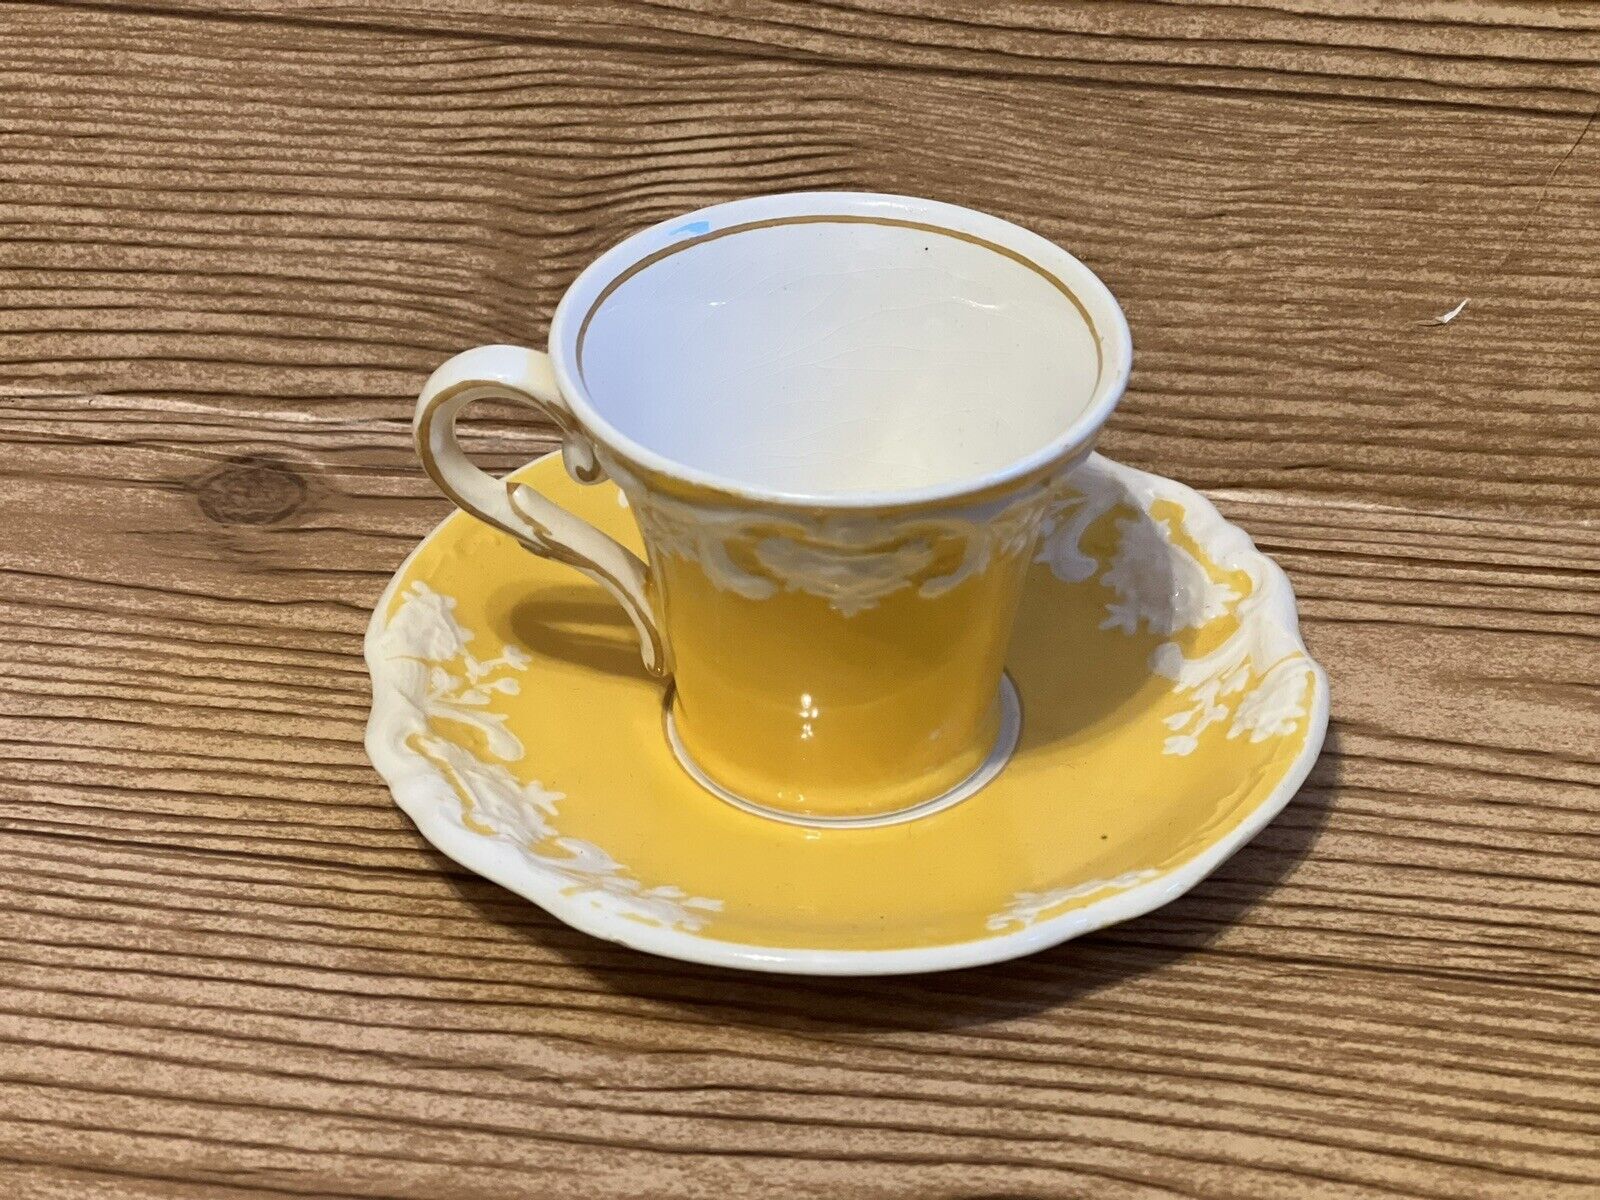 Marlborough George Jones and Sons England yellow tea cup and saucer